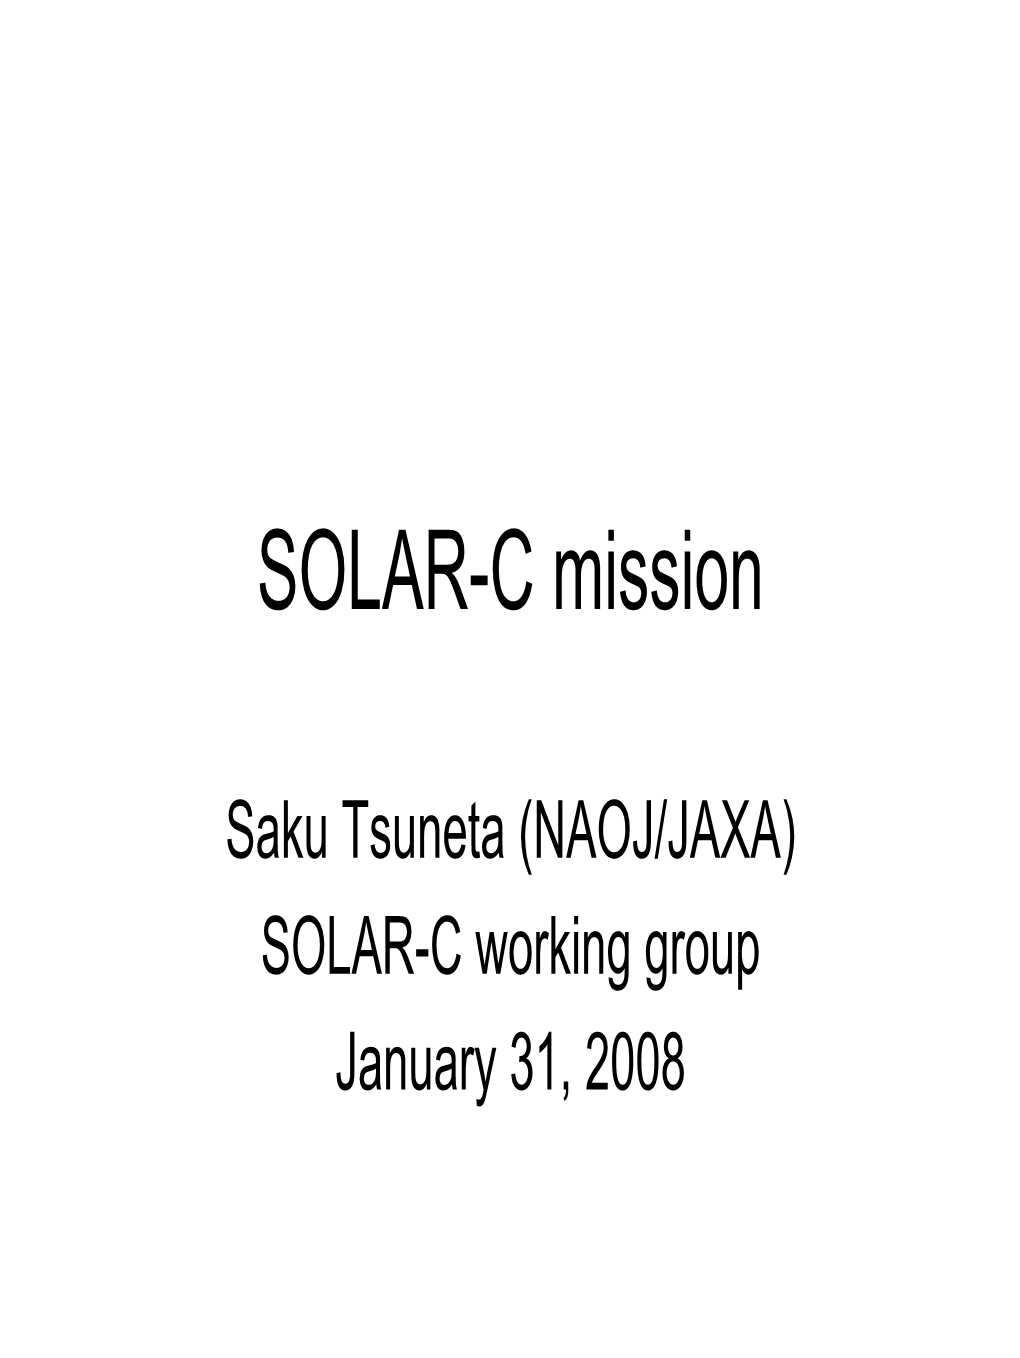 SOLAR-C Mission